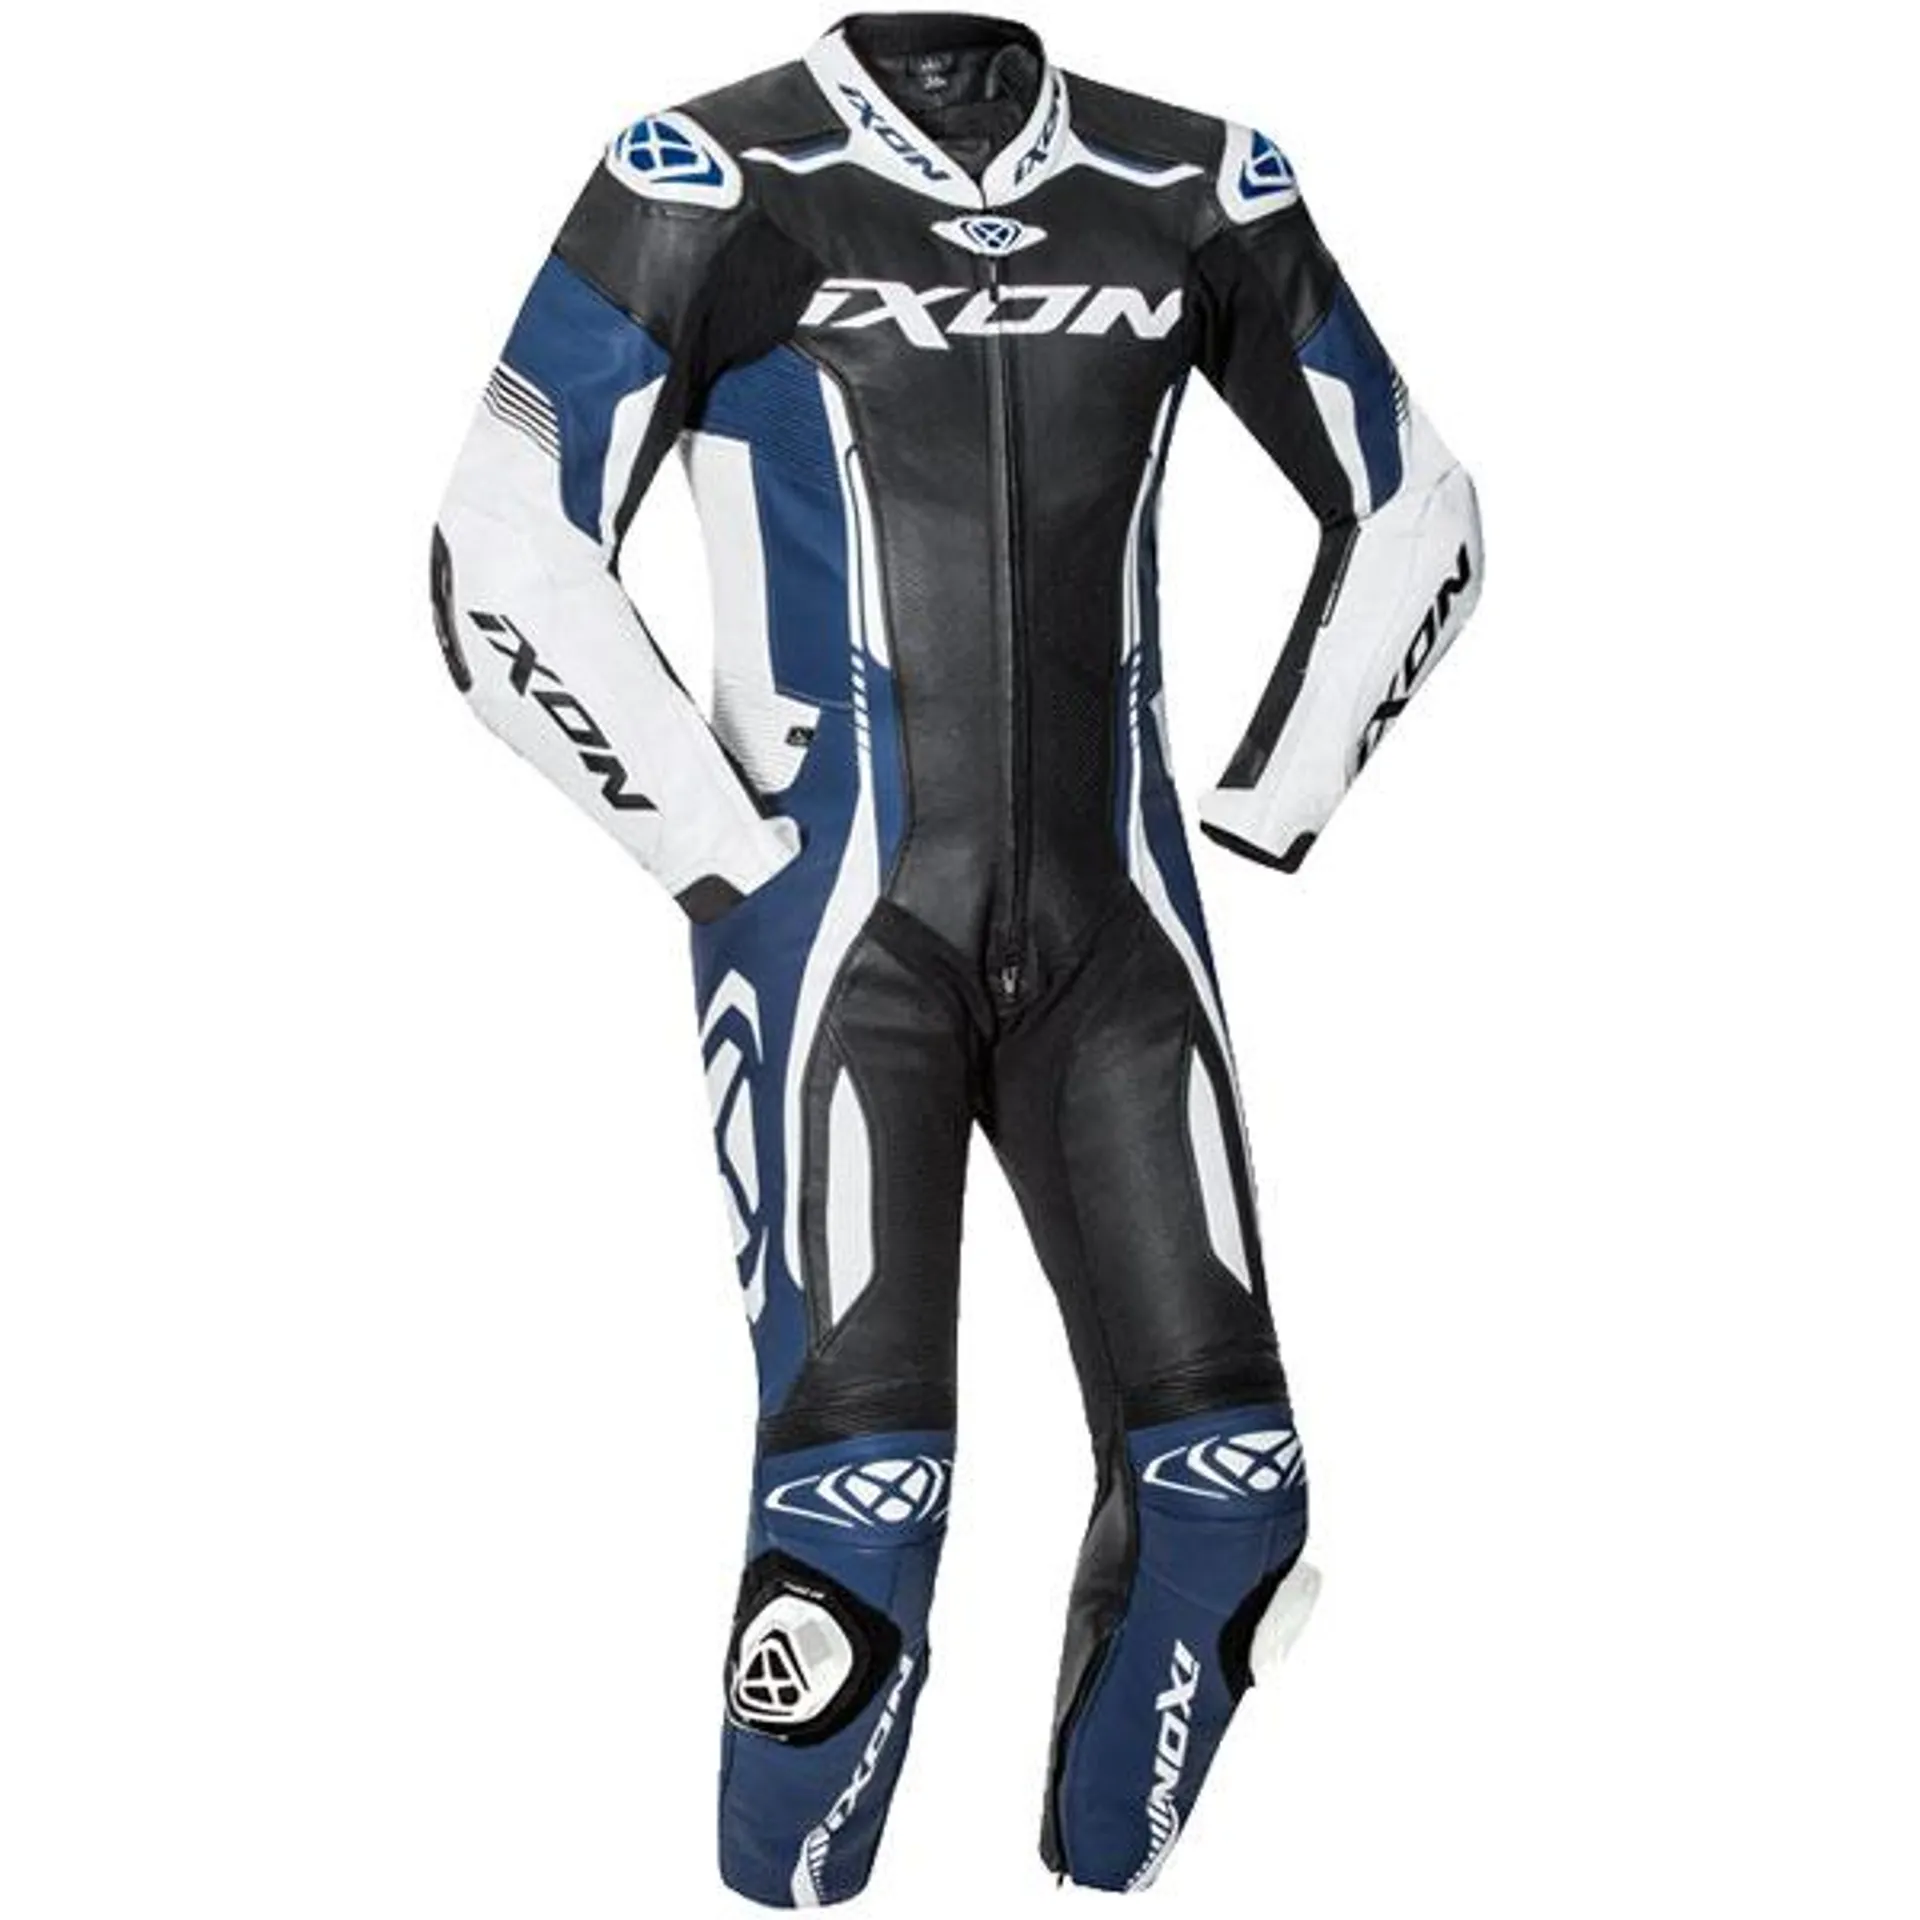 Ixon Vortex 2 1 Piece Suit - Black / White / Blue